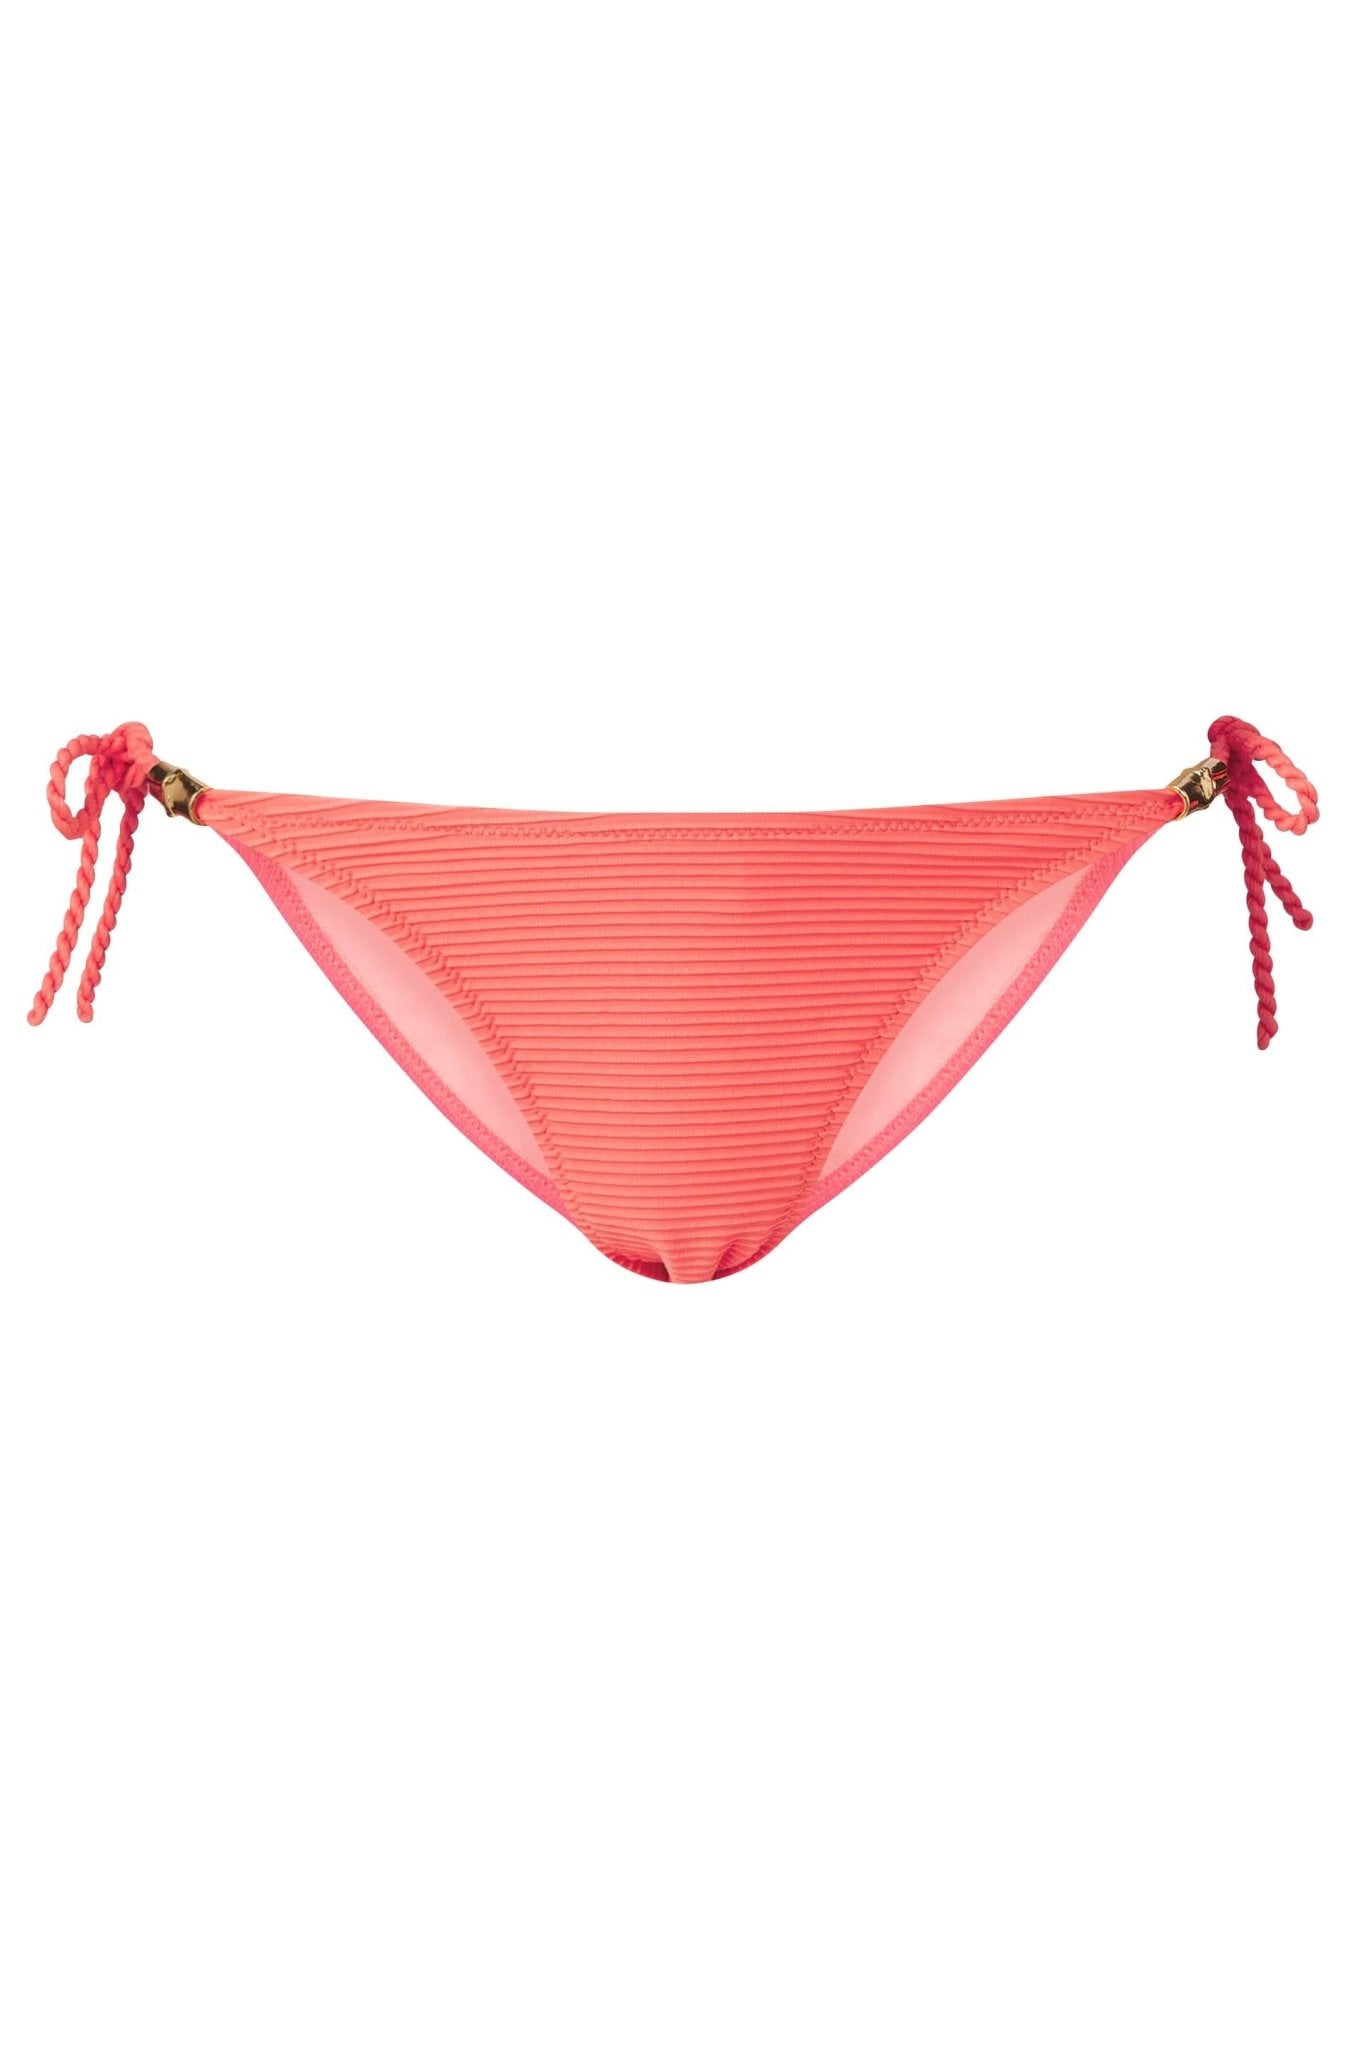 Tortola Rope Tie-Side Bikini Bottoms - Heidi Klein - UK Store